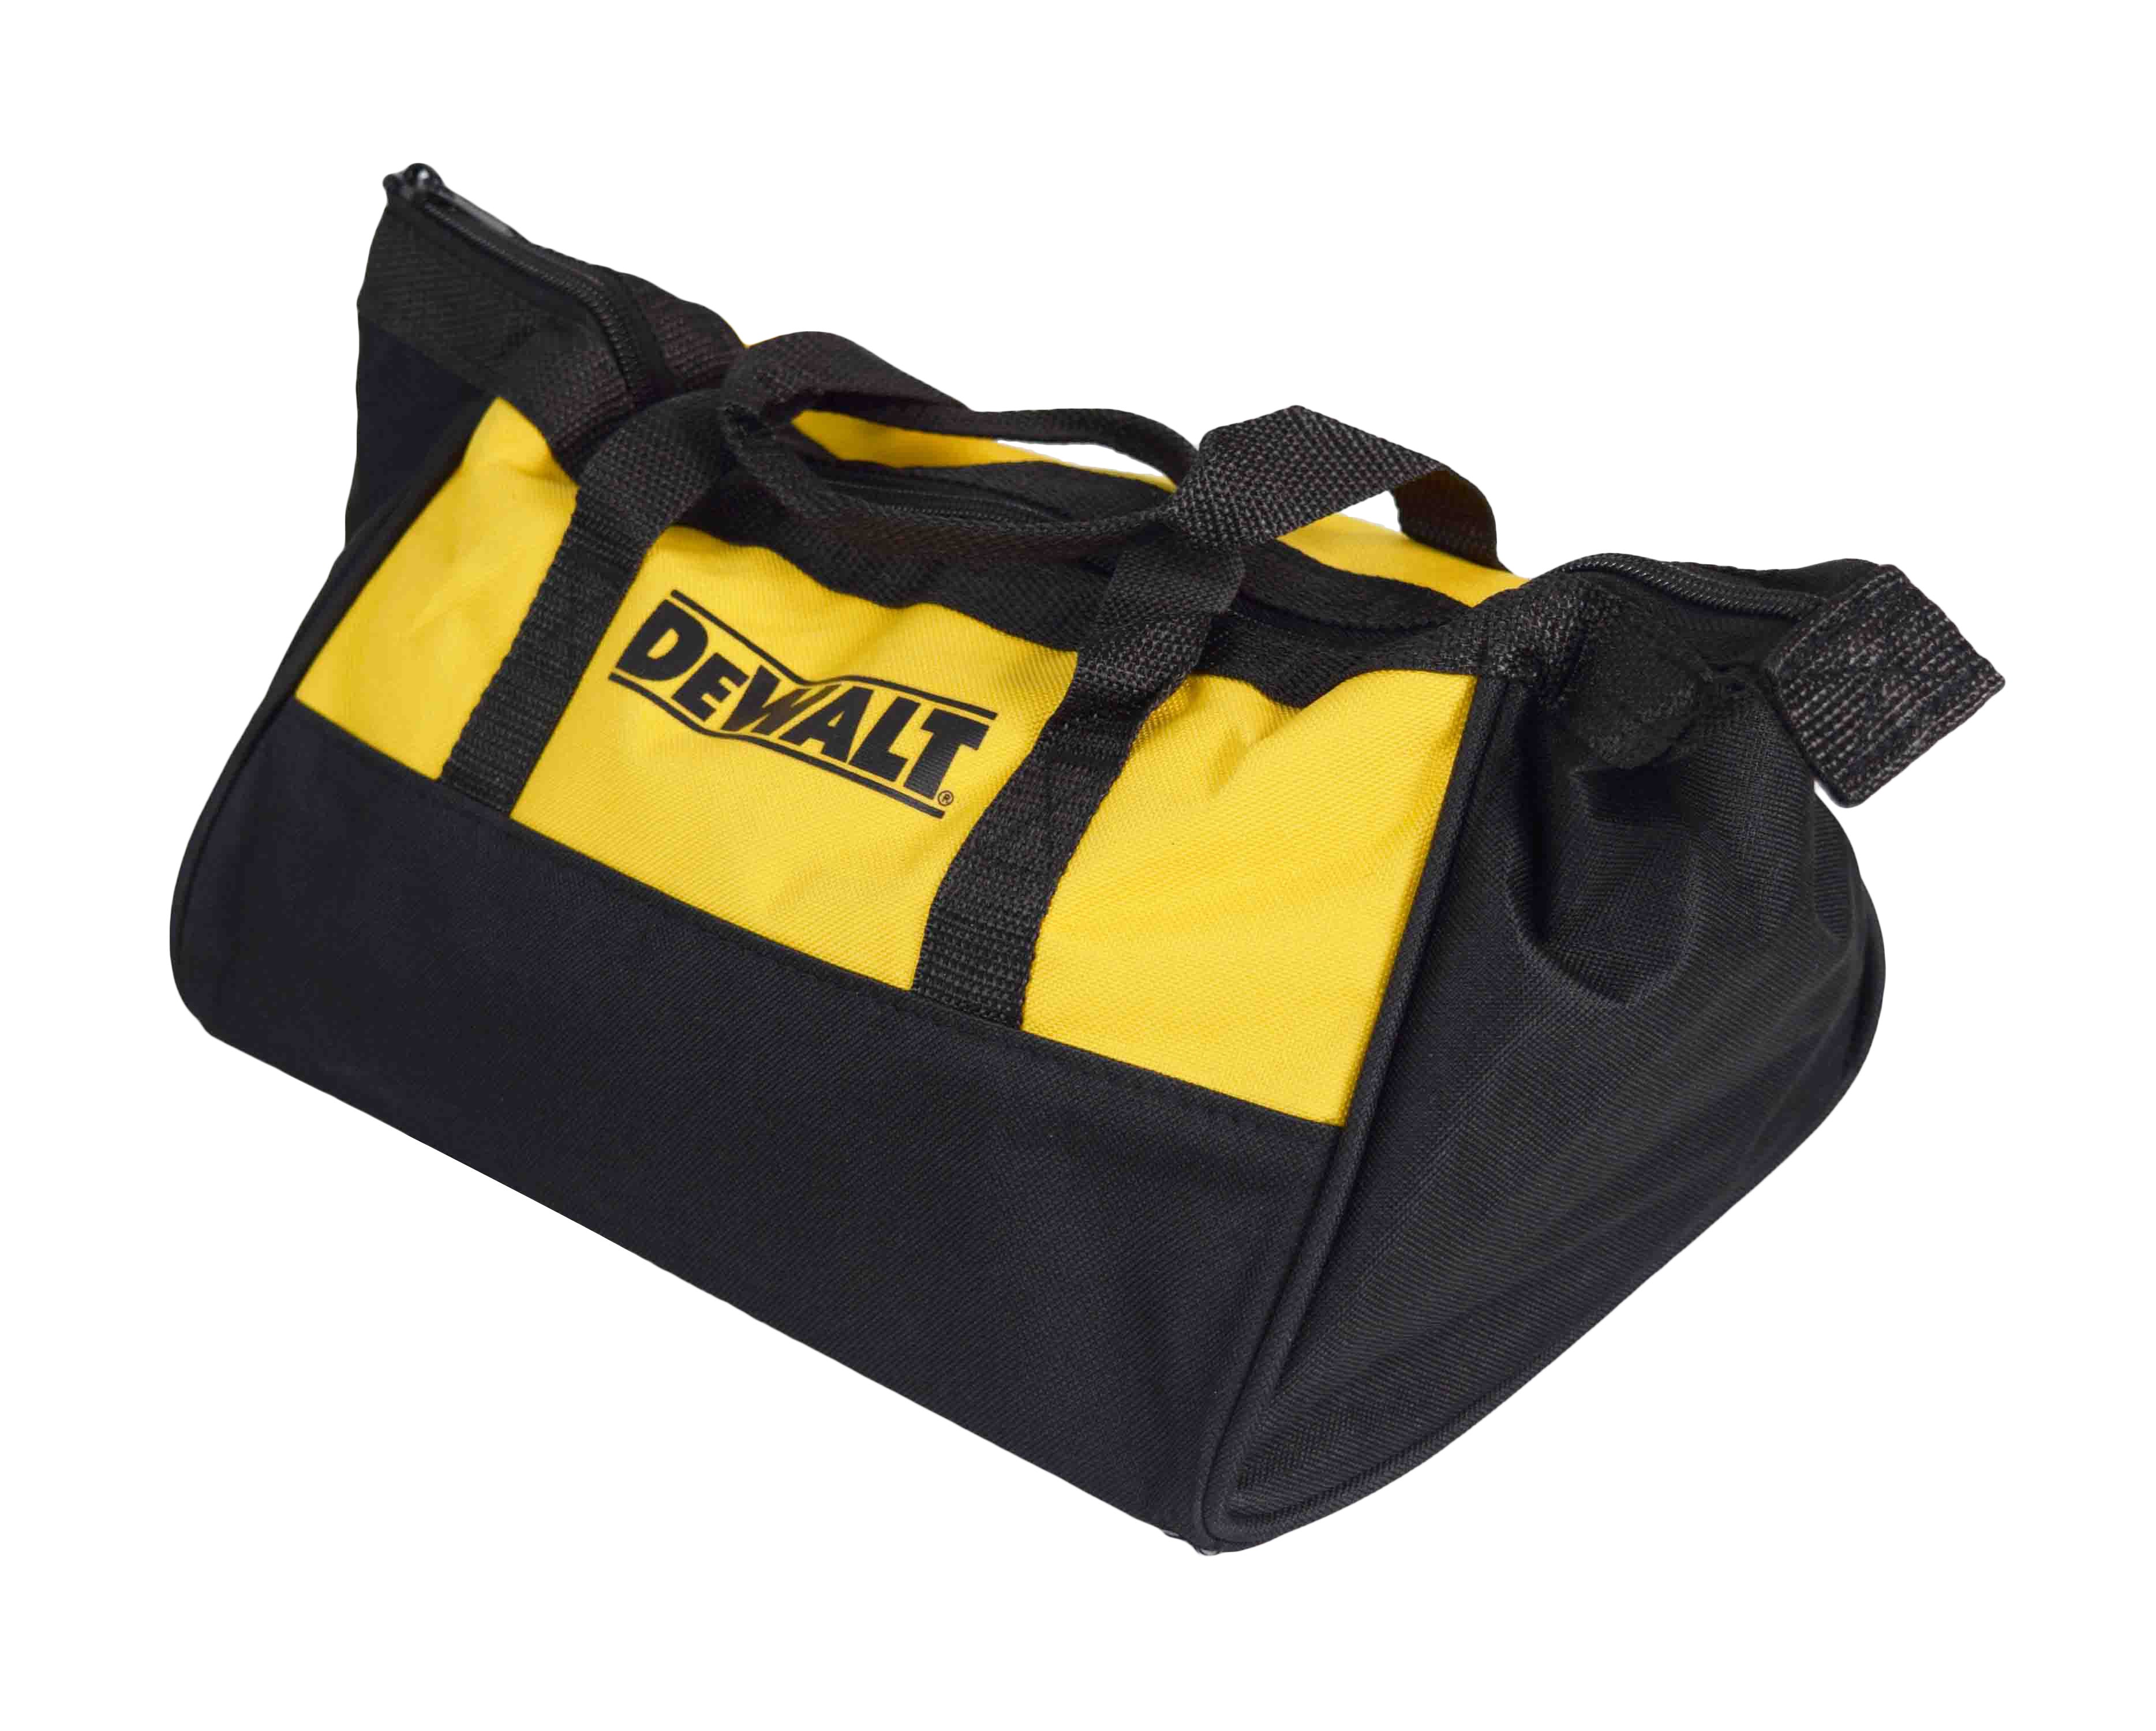 Dewalt Bag15Dewalt 15" Tool Bag Nylon With Zipper Closure